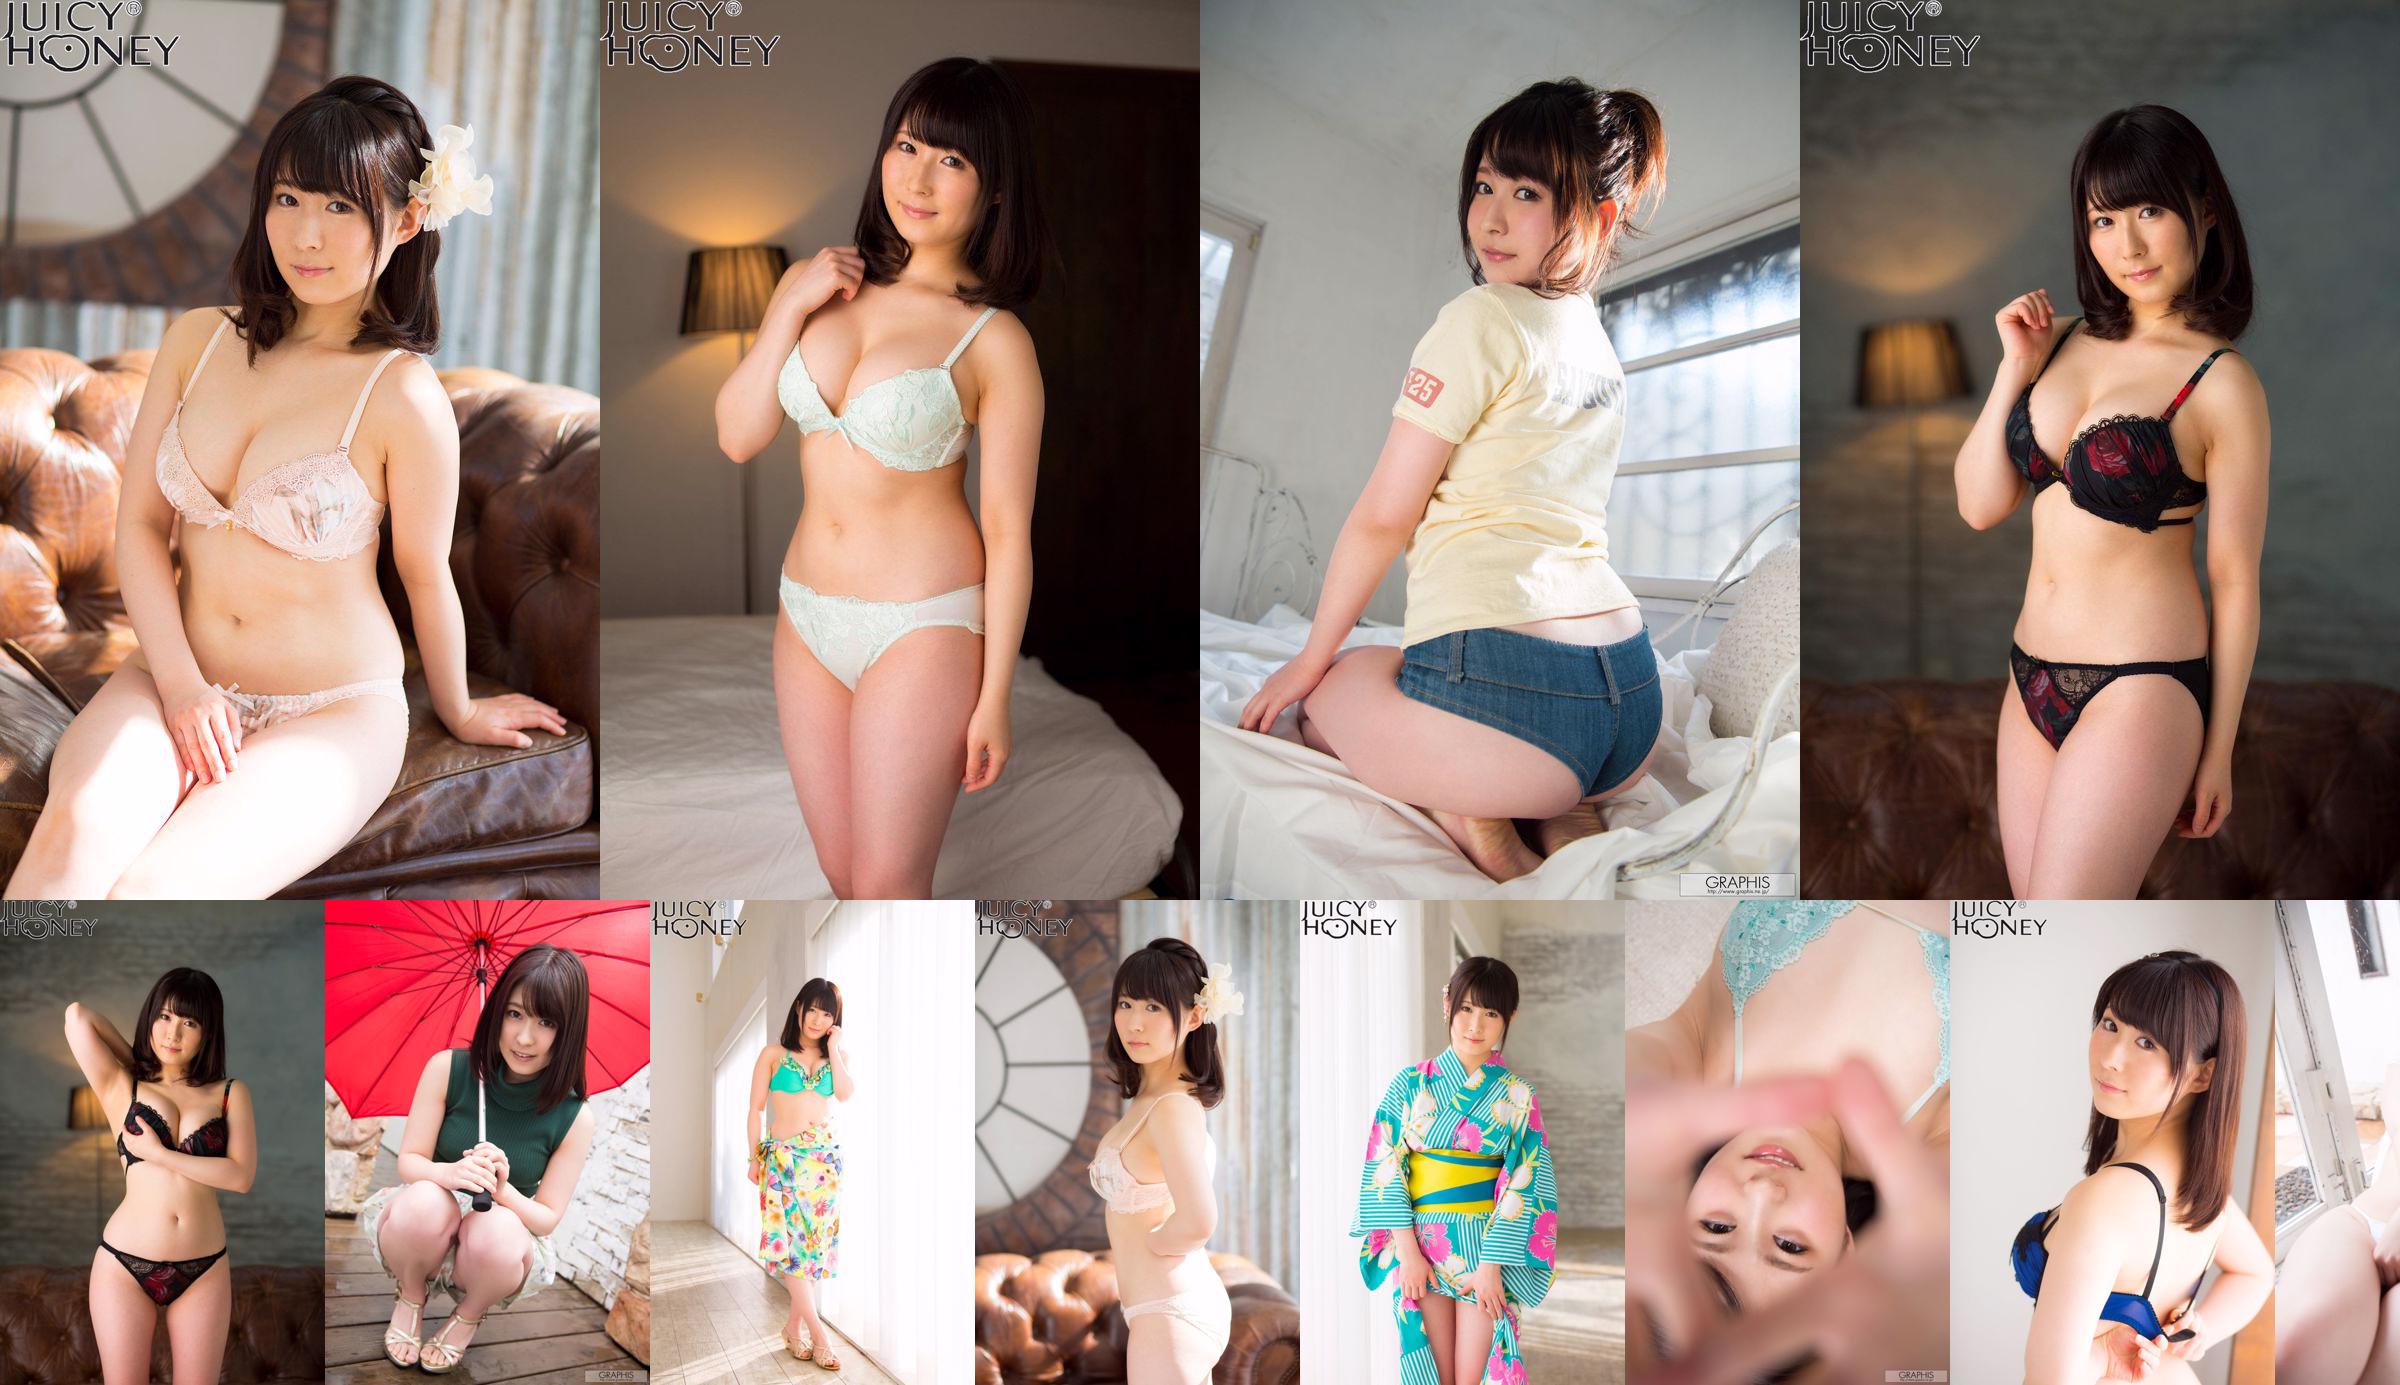 [X-City] Juicy Honey jh216 Asuka Rin Asuka No.292c96 Halaman 1